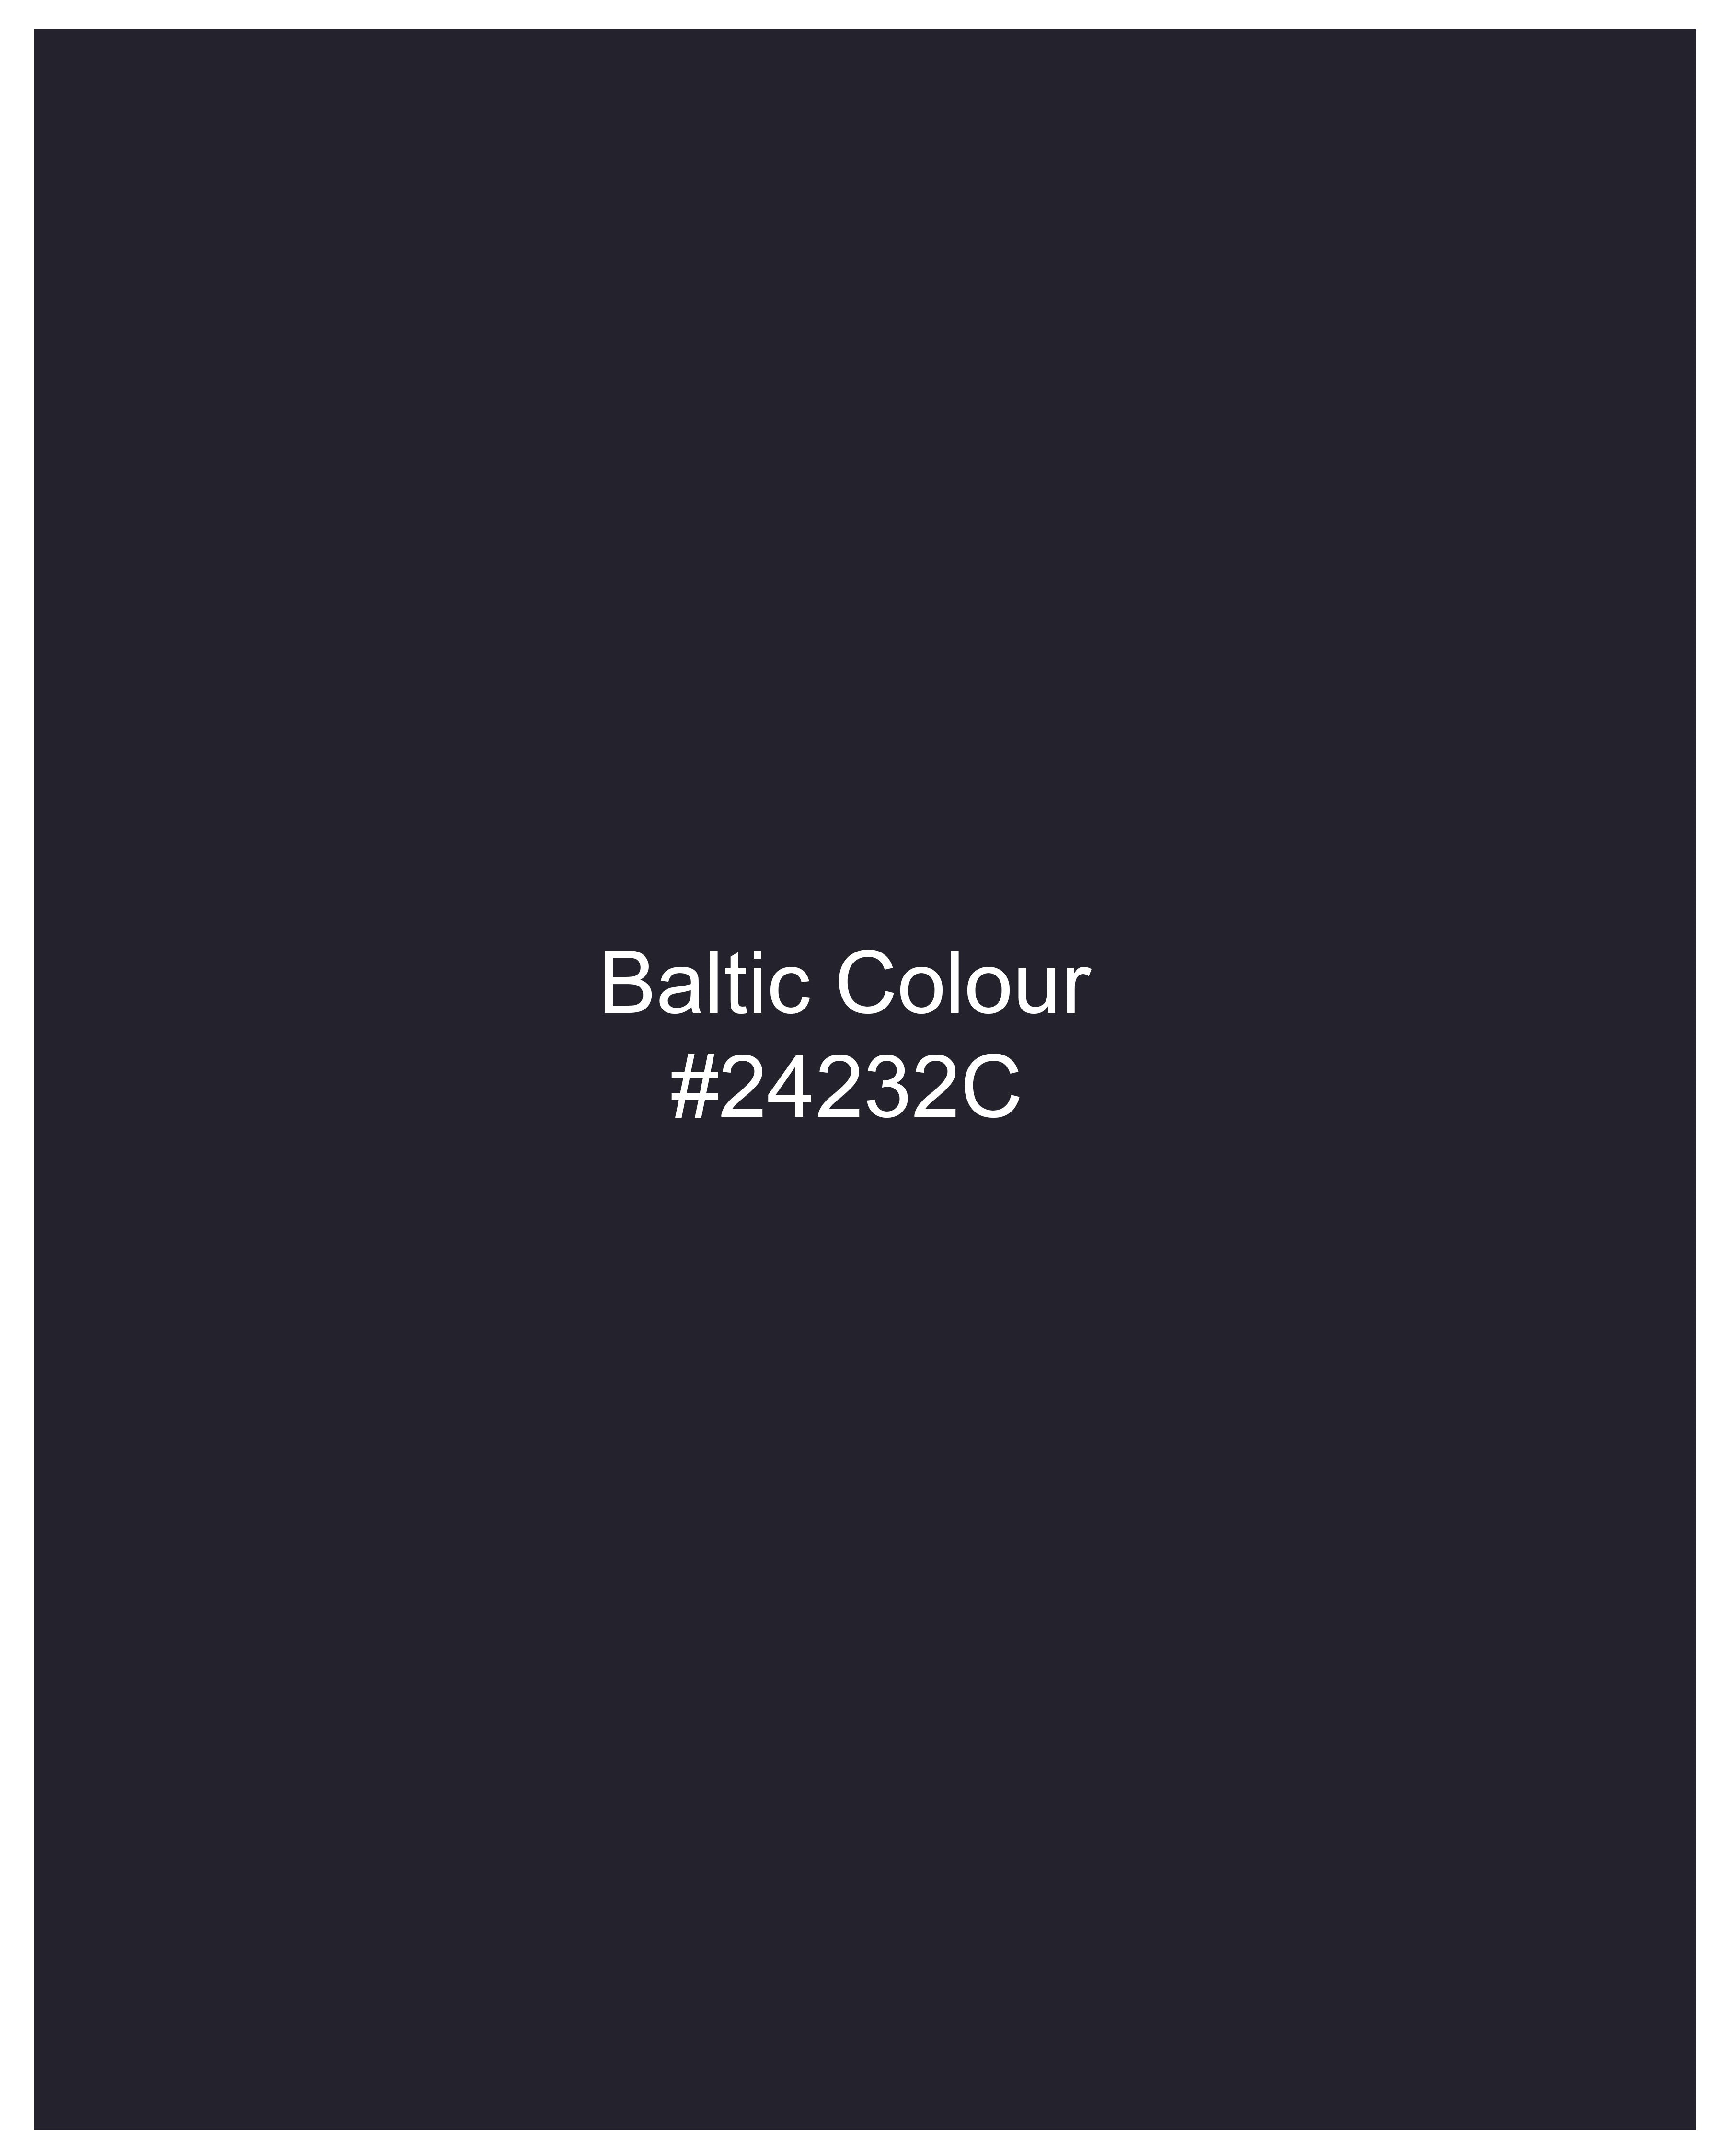 Baltic Dark Blue Twill Striped Premium Cotton Shirt 9127-BLK-38,9127-BLK-H-38,9127-BLK-39,9127-BLK-H-39,9127-BLK-40,9127-BLK-H-40,9127-BLK-42,9127-BLK-H-42,9127-BLK-44,9127-BLK-H-44,9127-BLK-46,9127-BLK-H-46,9127-BLK-48,9127-BLK-H-48,9127-BLK-50,9127-BLK-H-50,9127-BLK-52,9127-BLK-H-52